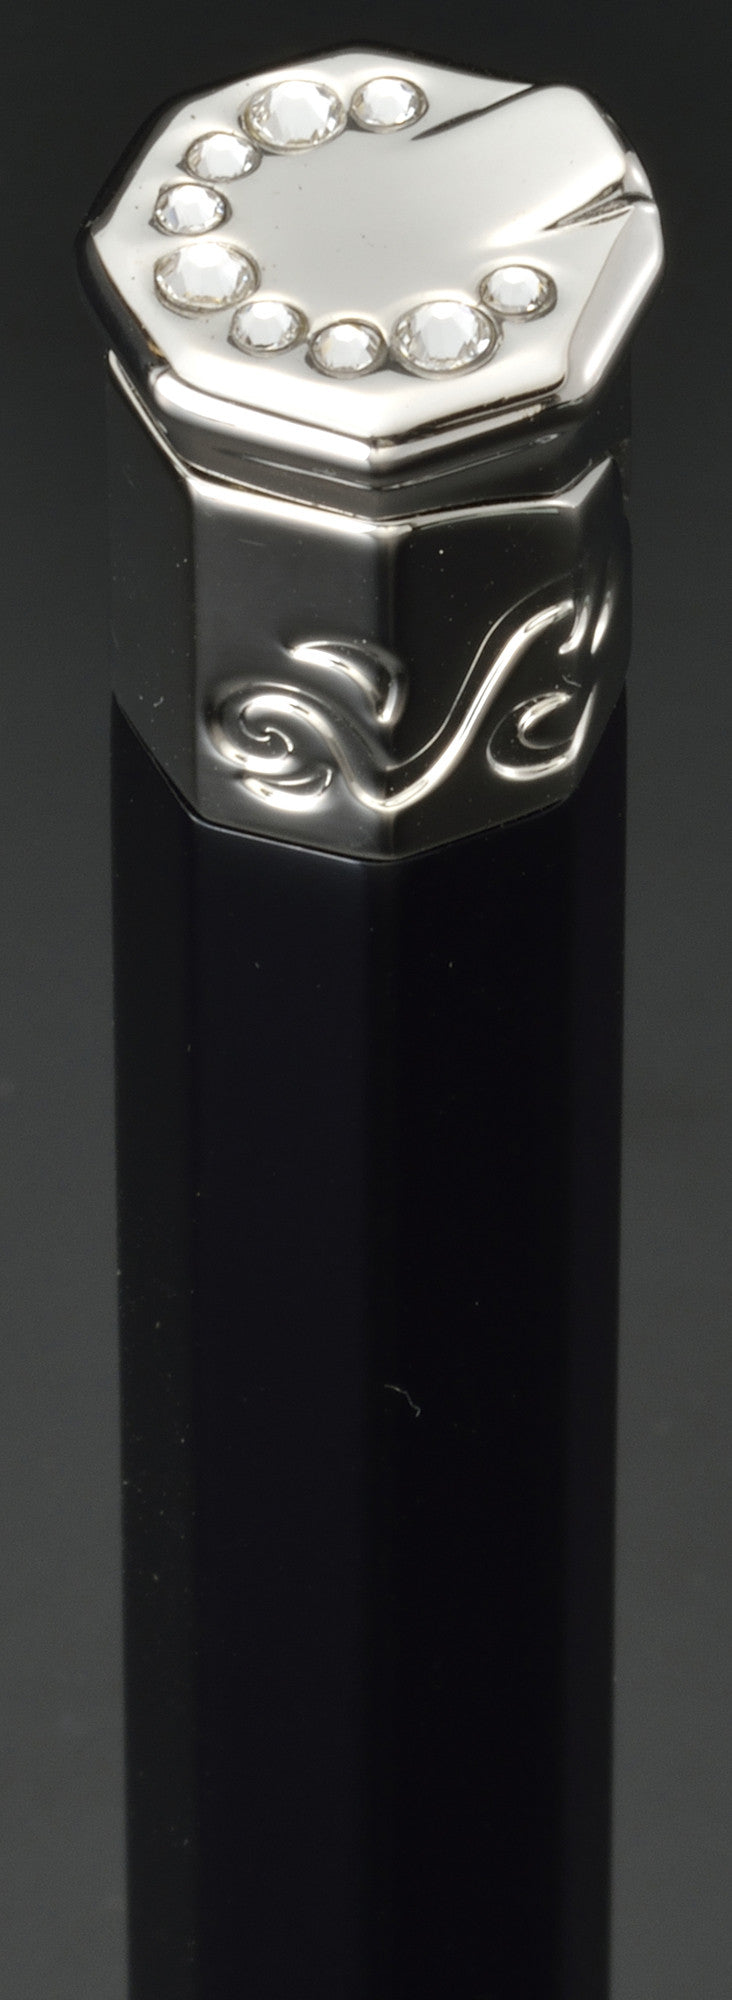 Sarome Piezo Electronic Lighter SK150-01 Silver/Black